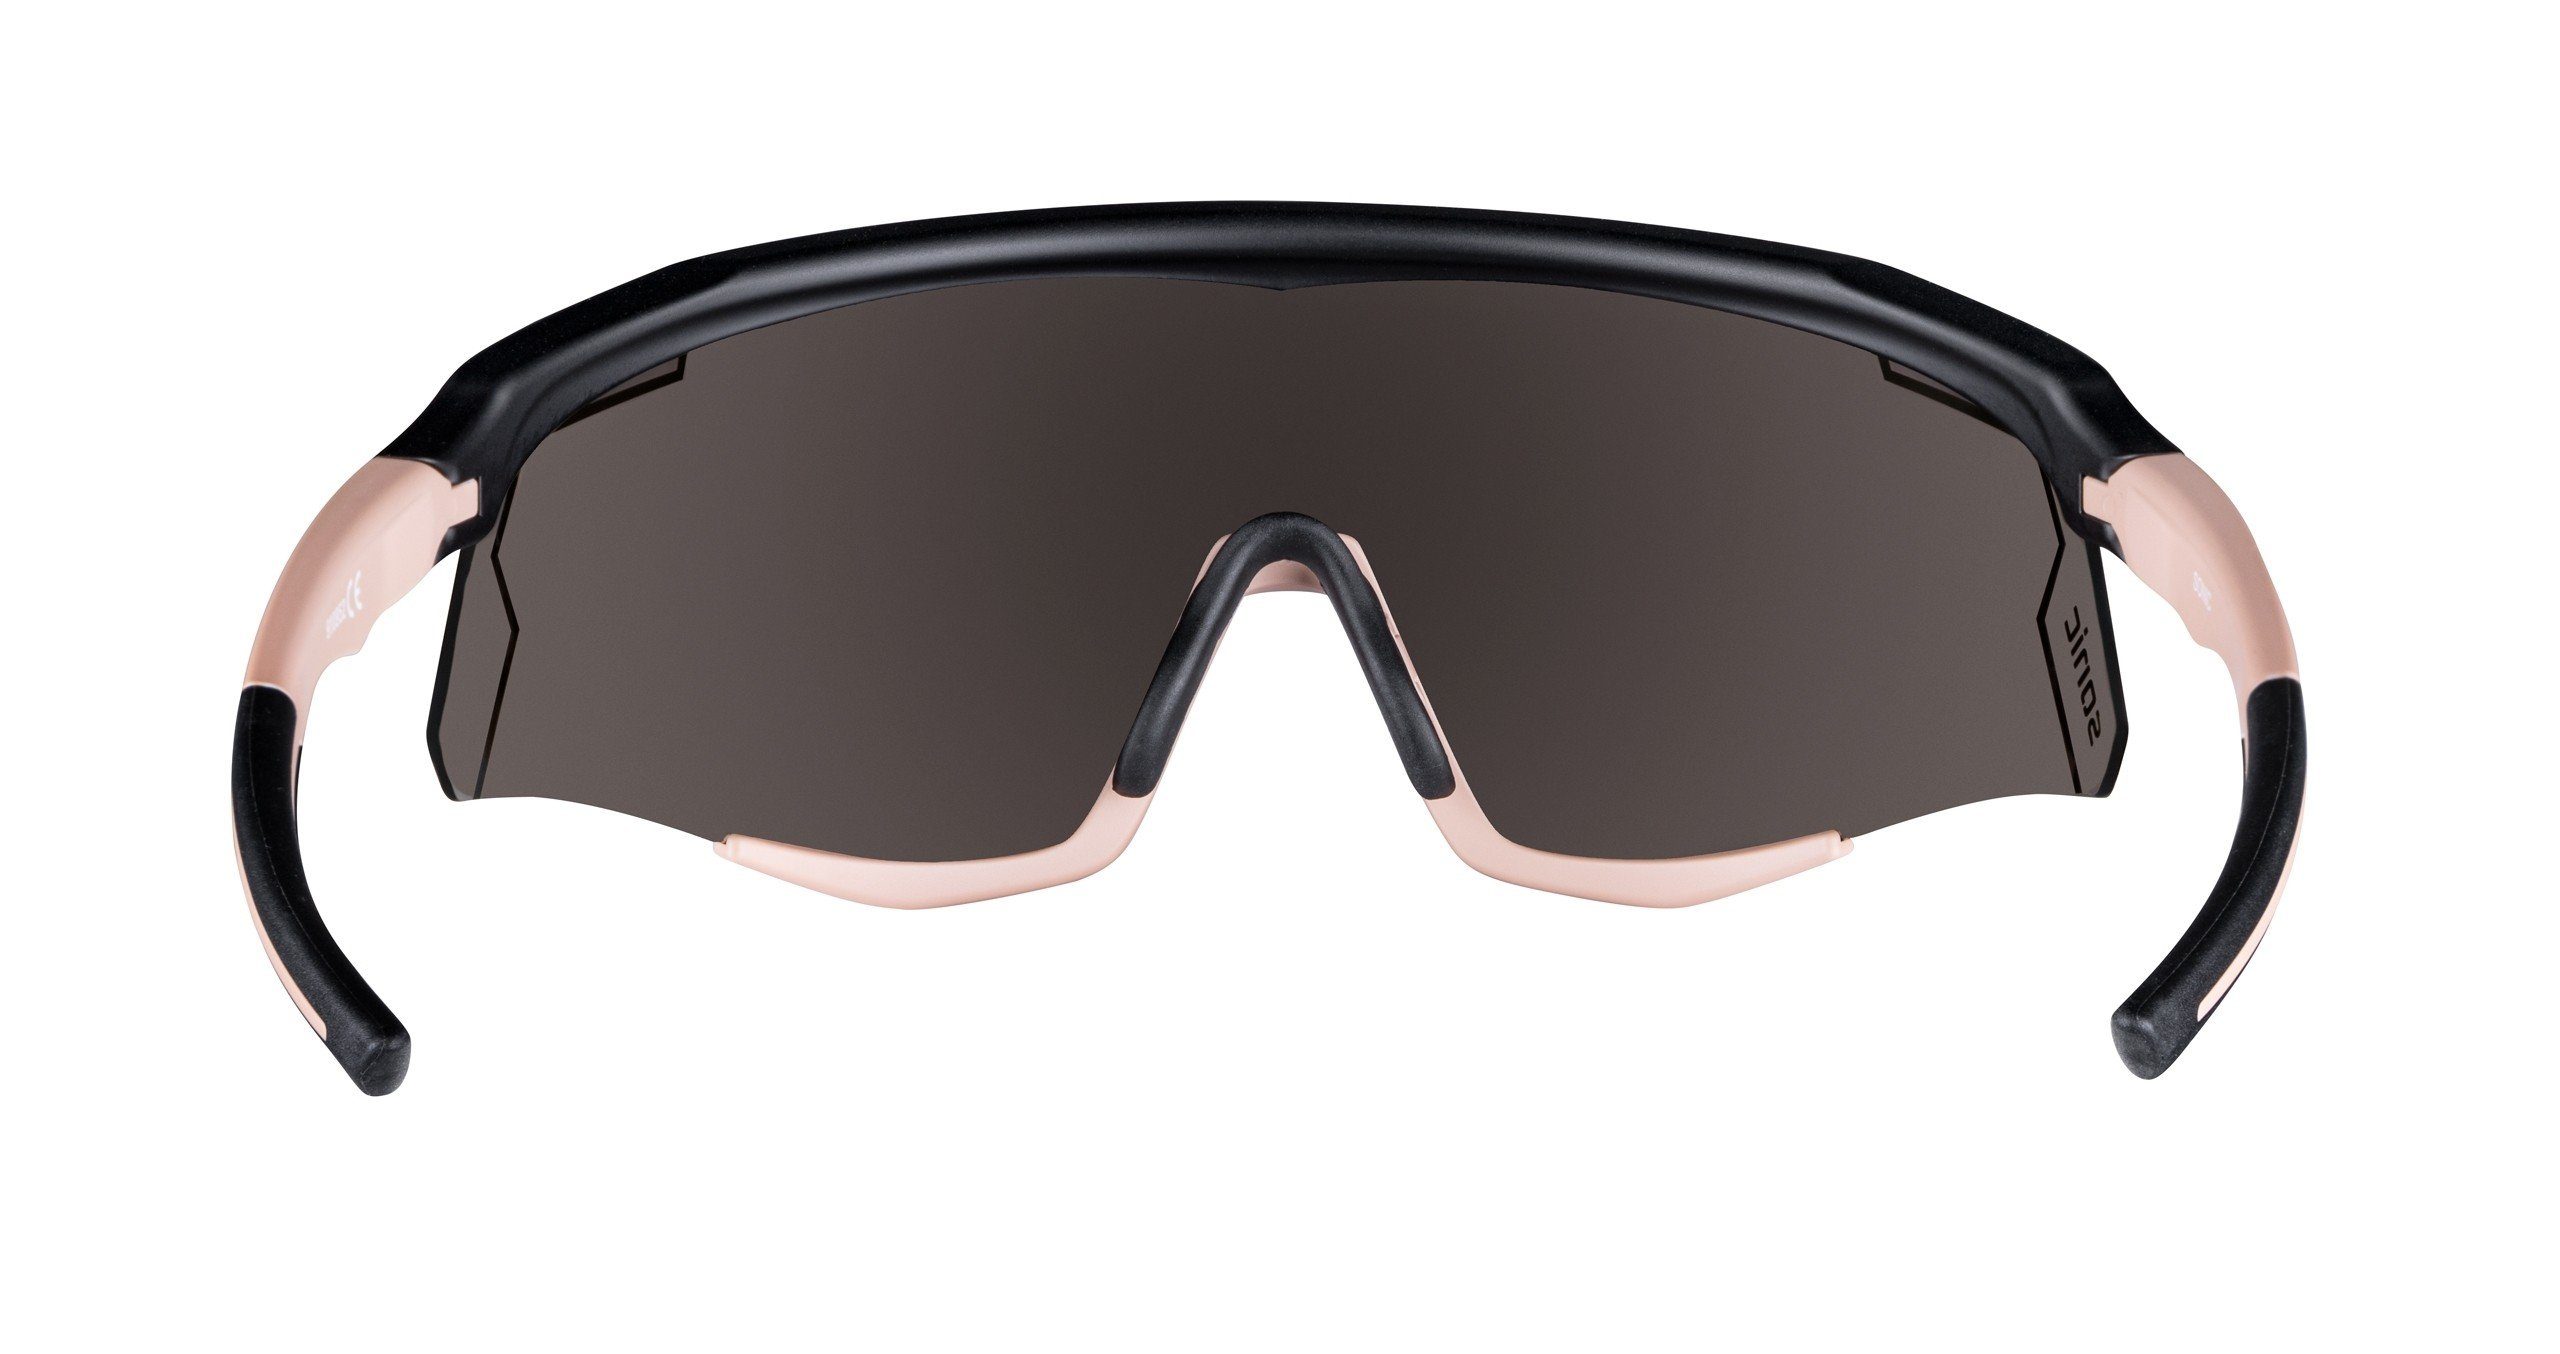 SONIC Sonnenbrille FORCE FORCE schwarz-bronze-silber Fahrradbrille